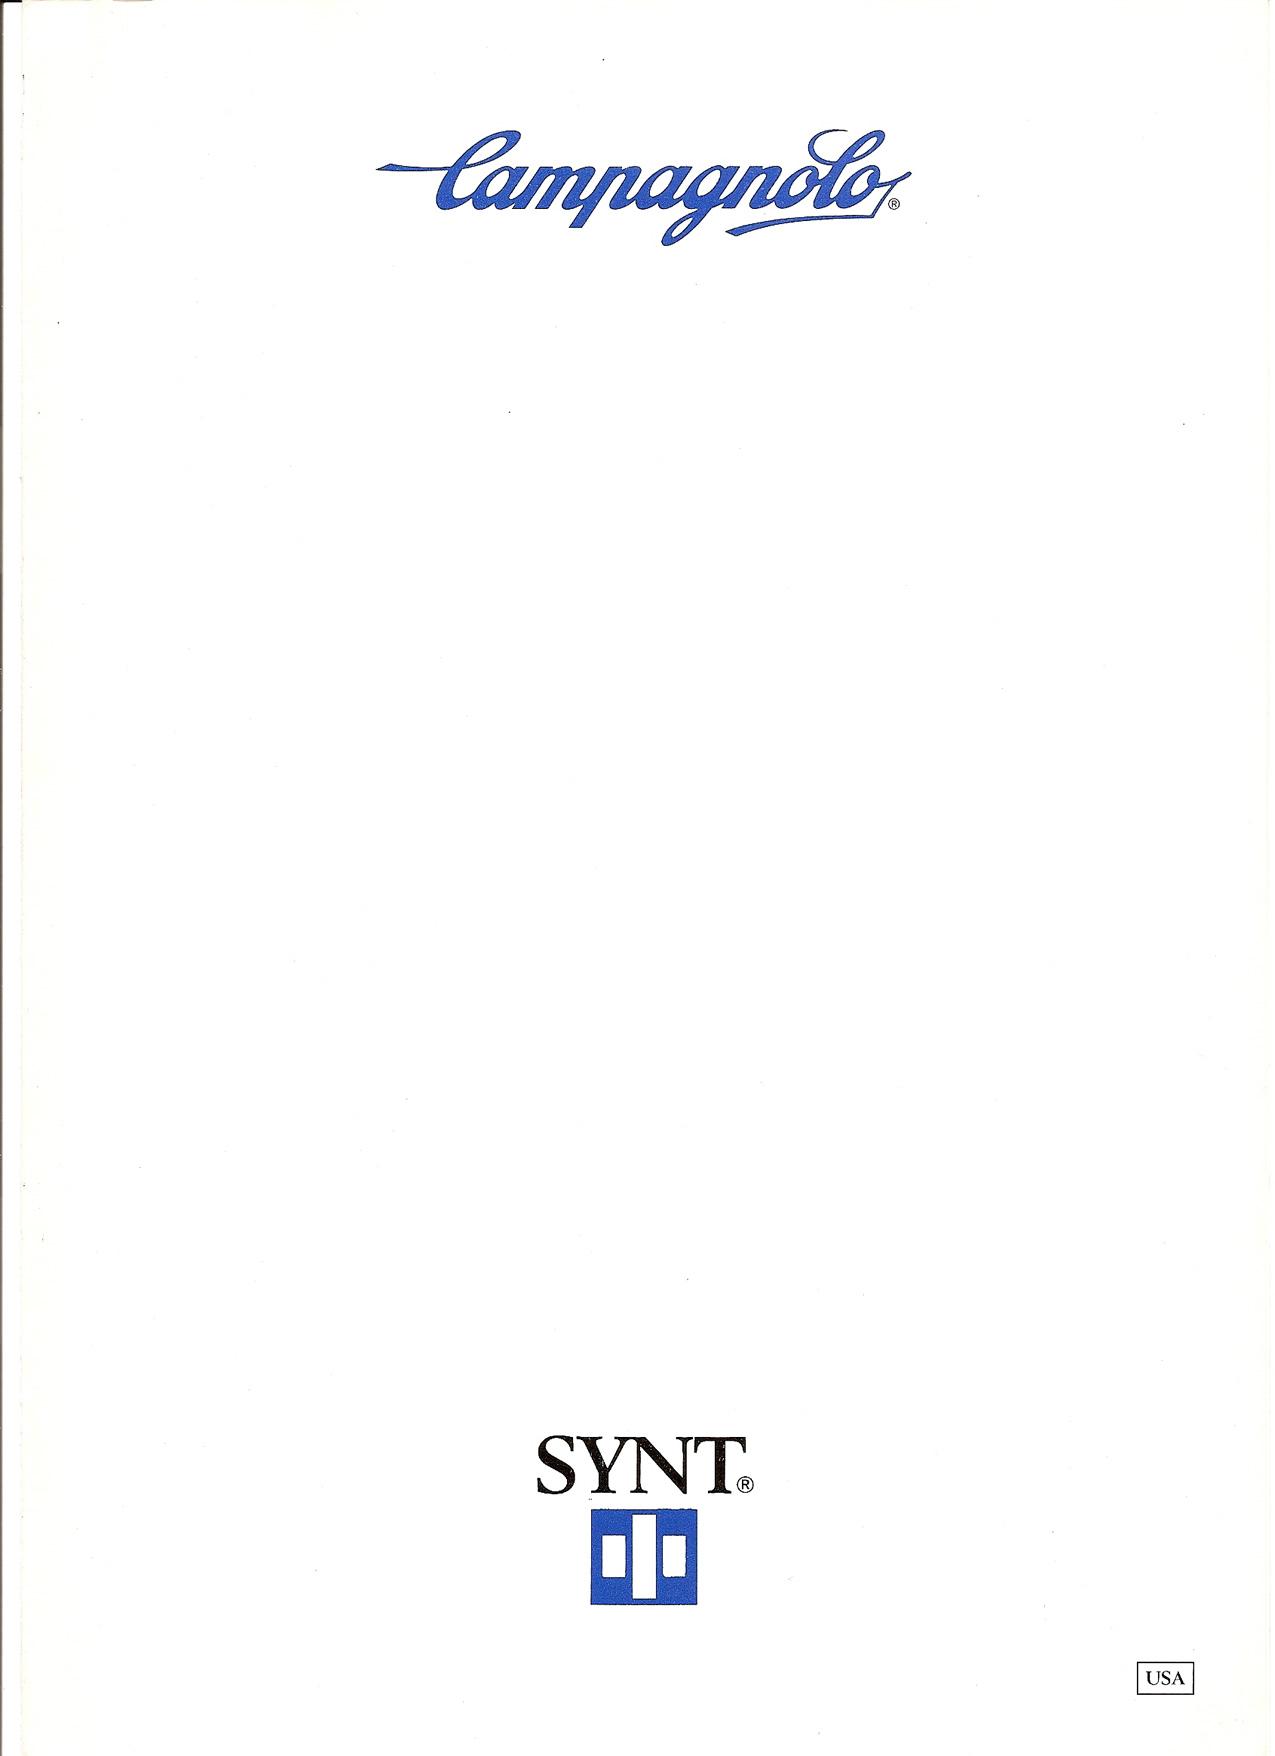 1987 Campagnolo Synt Catalog